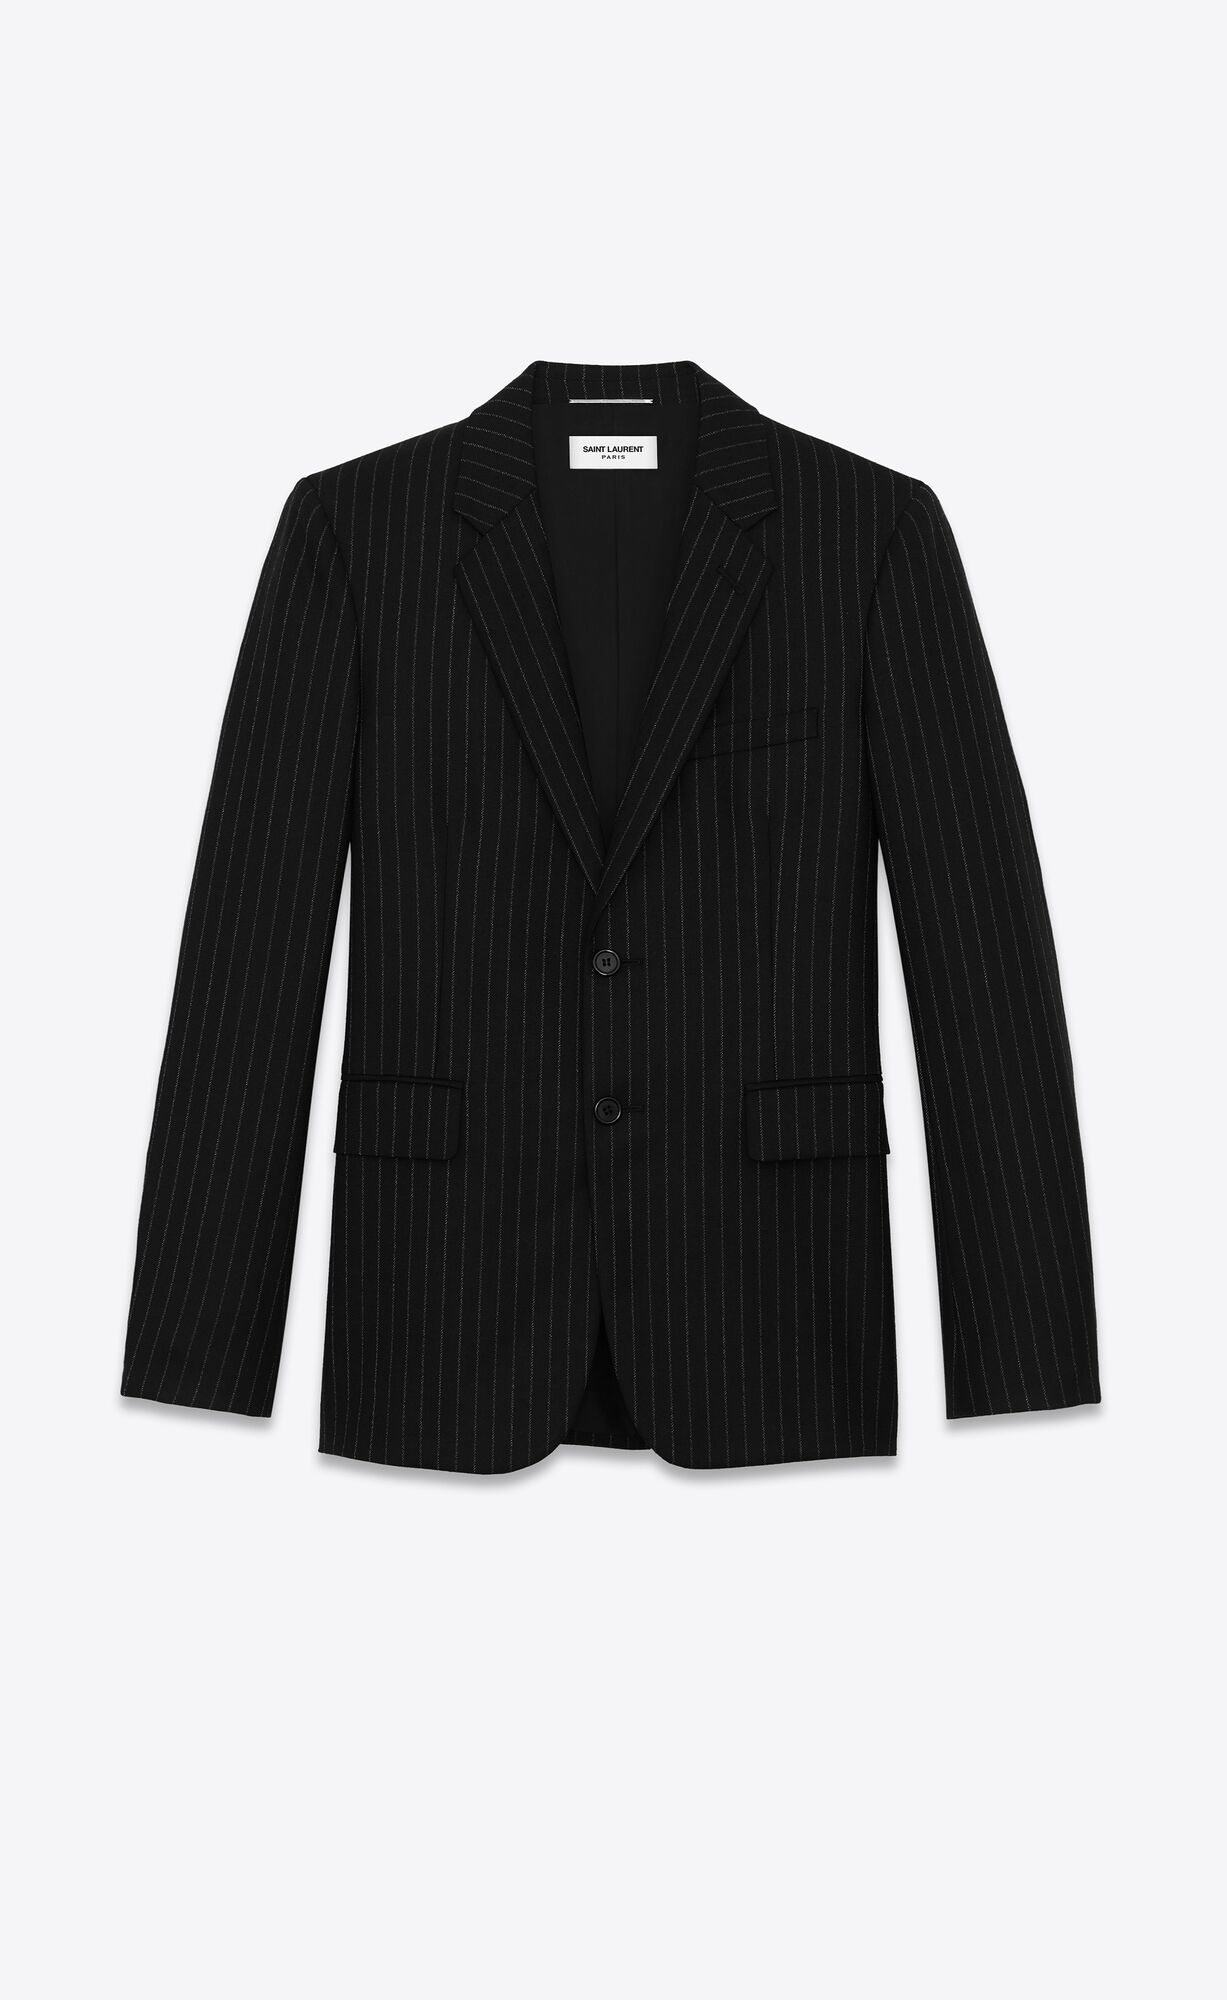 Flannel jacket in rive gauche stripes wool flannel | Saint Laurent ...